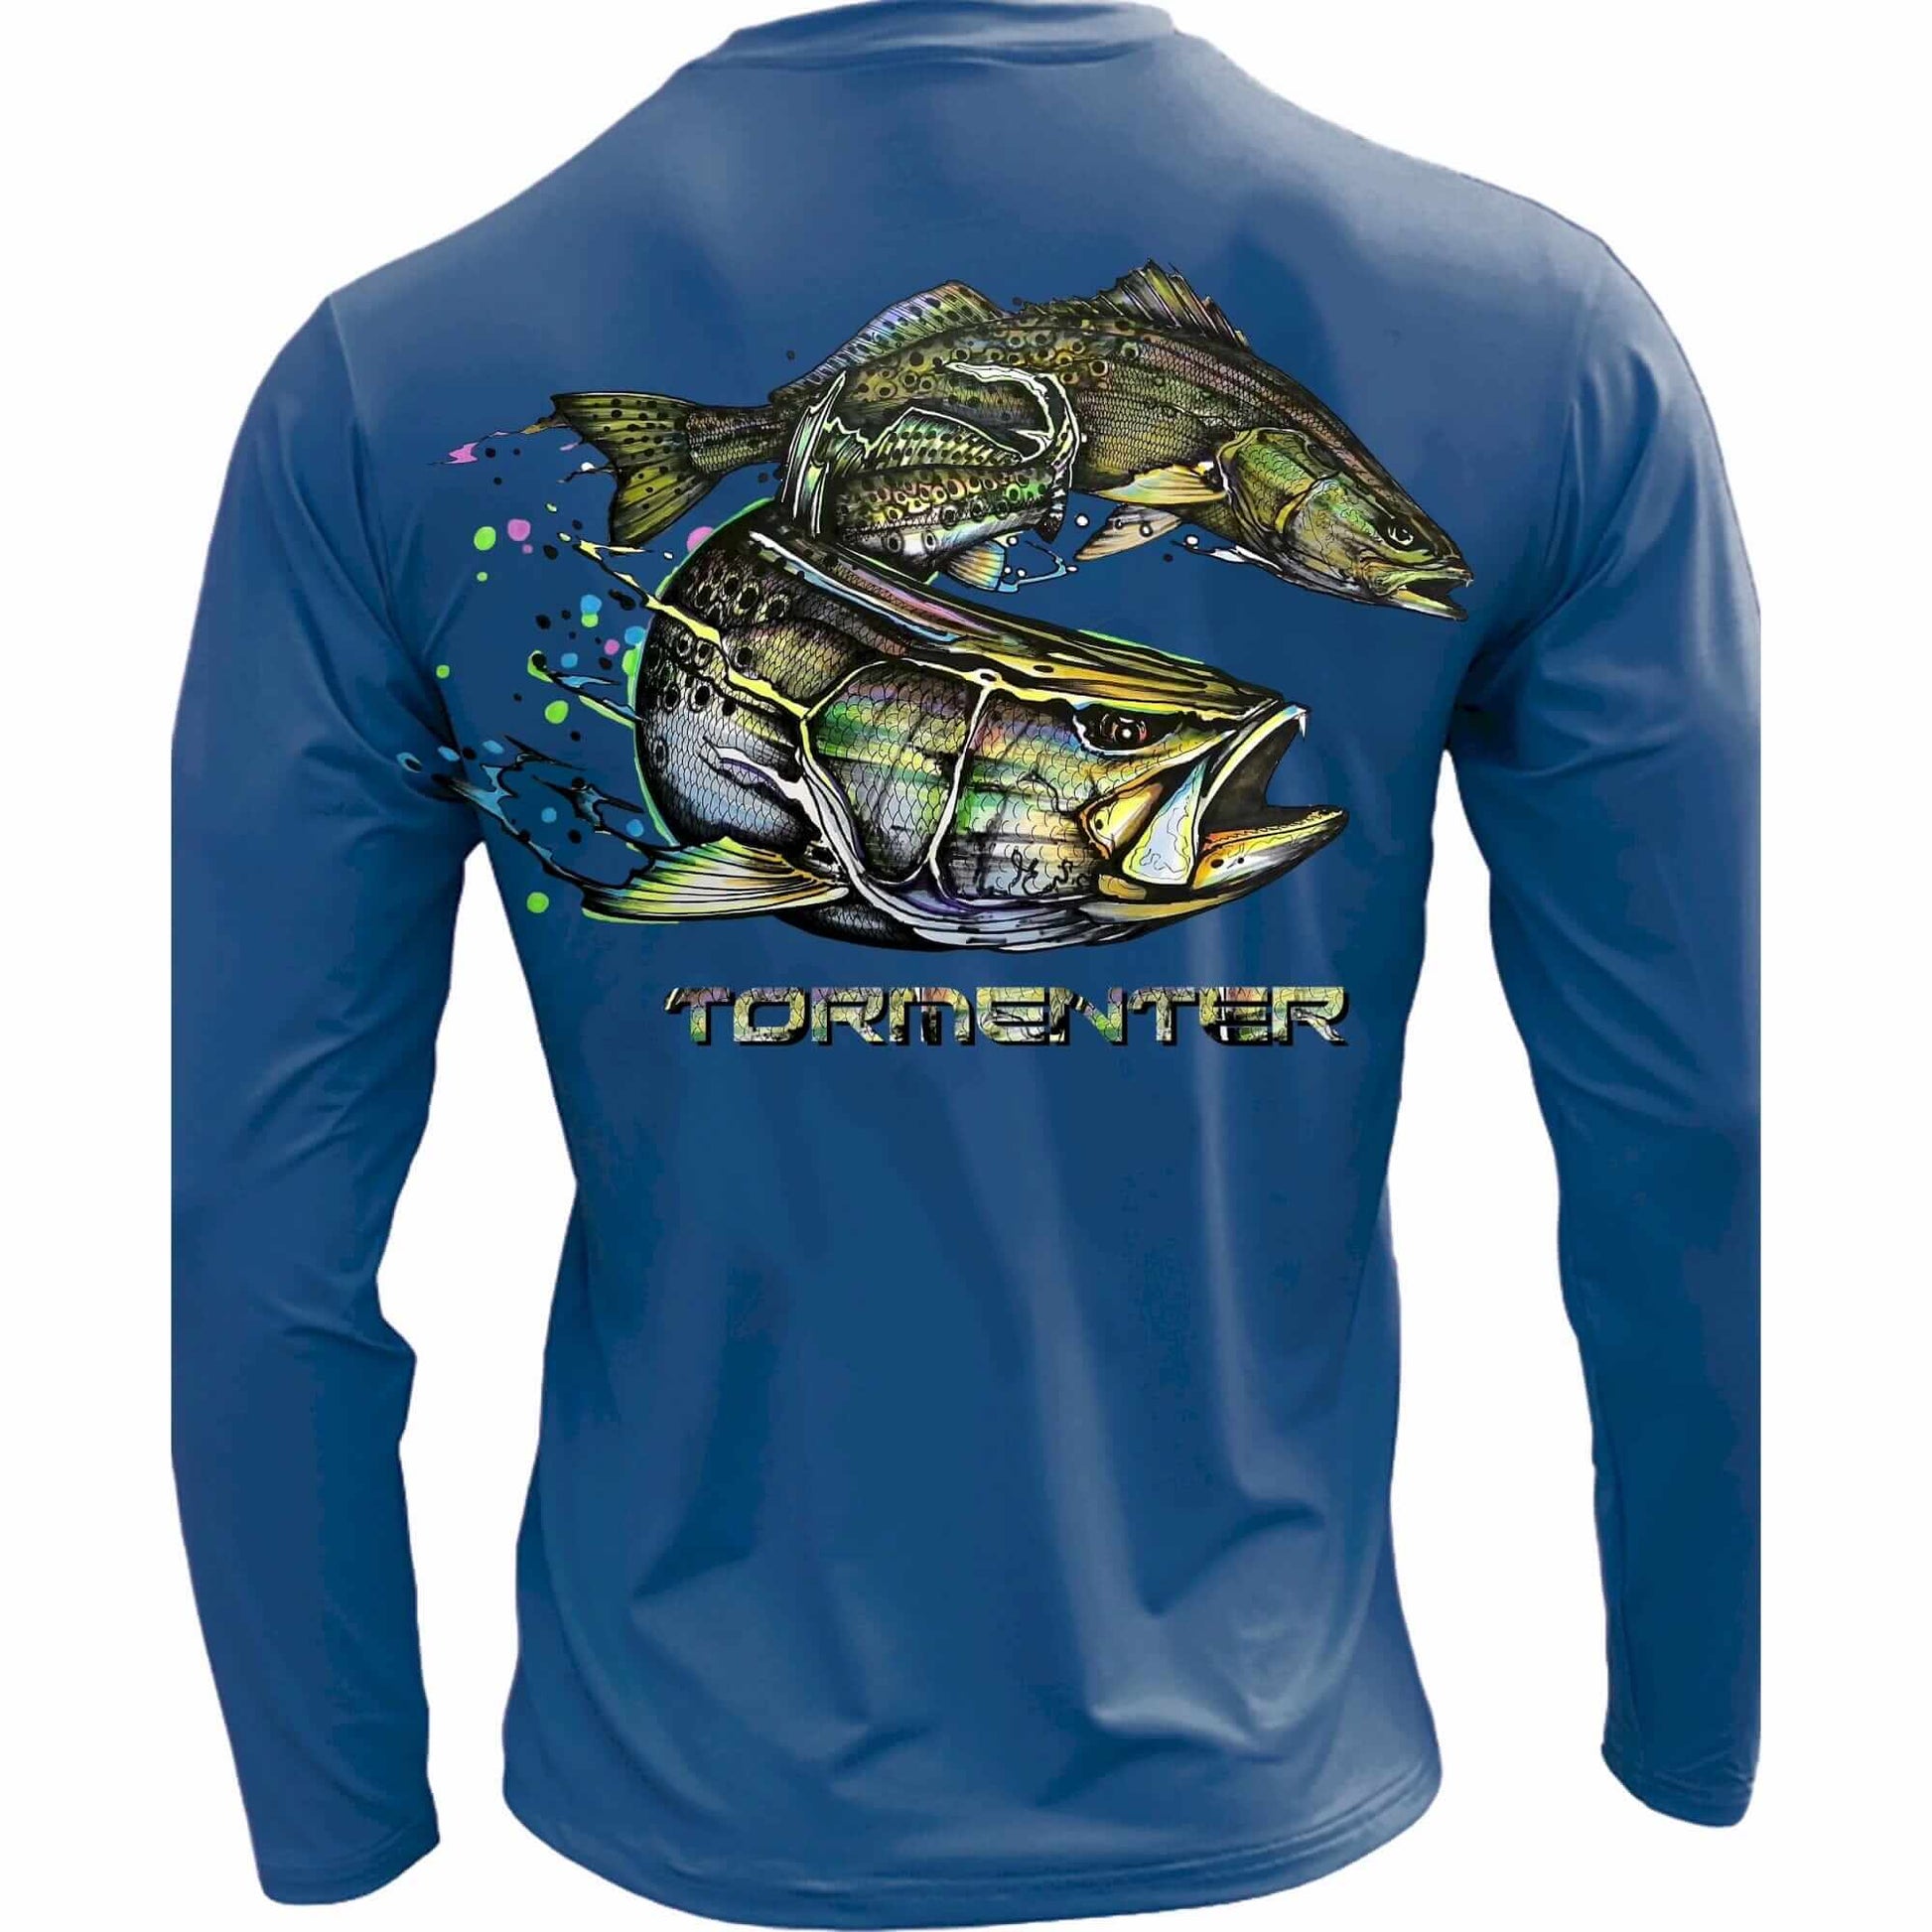 Men's Performance Shirt- Speckled Trout Men's SPF Ocean Fishing Tops Tormenter Ocean Midnight Blue S 